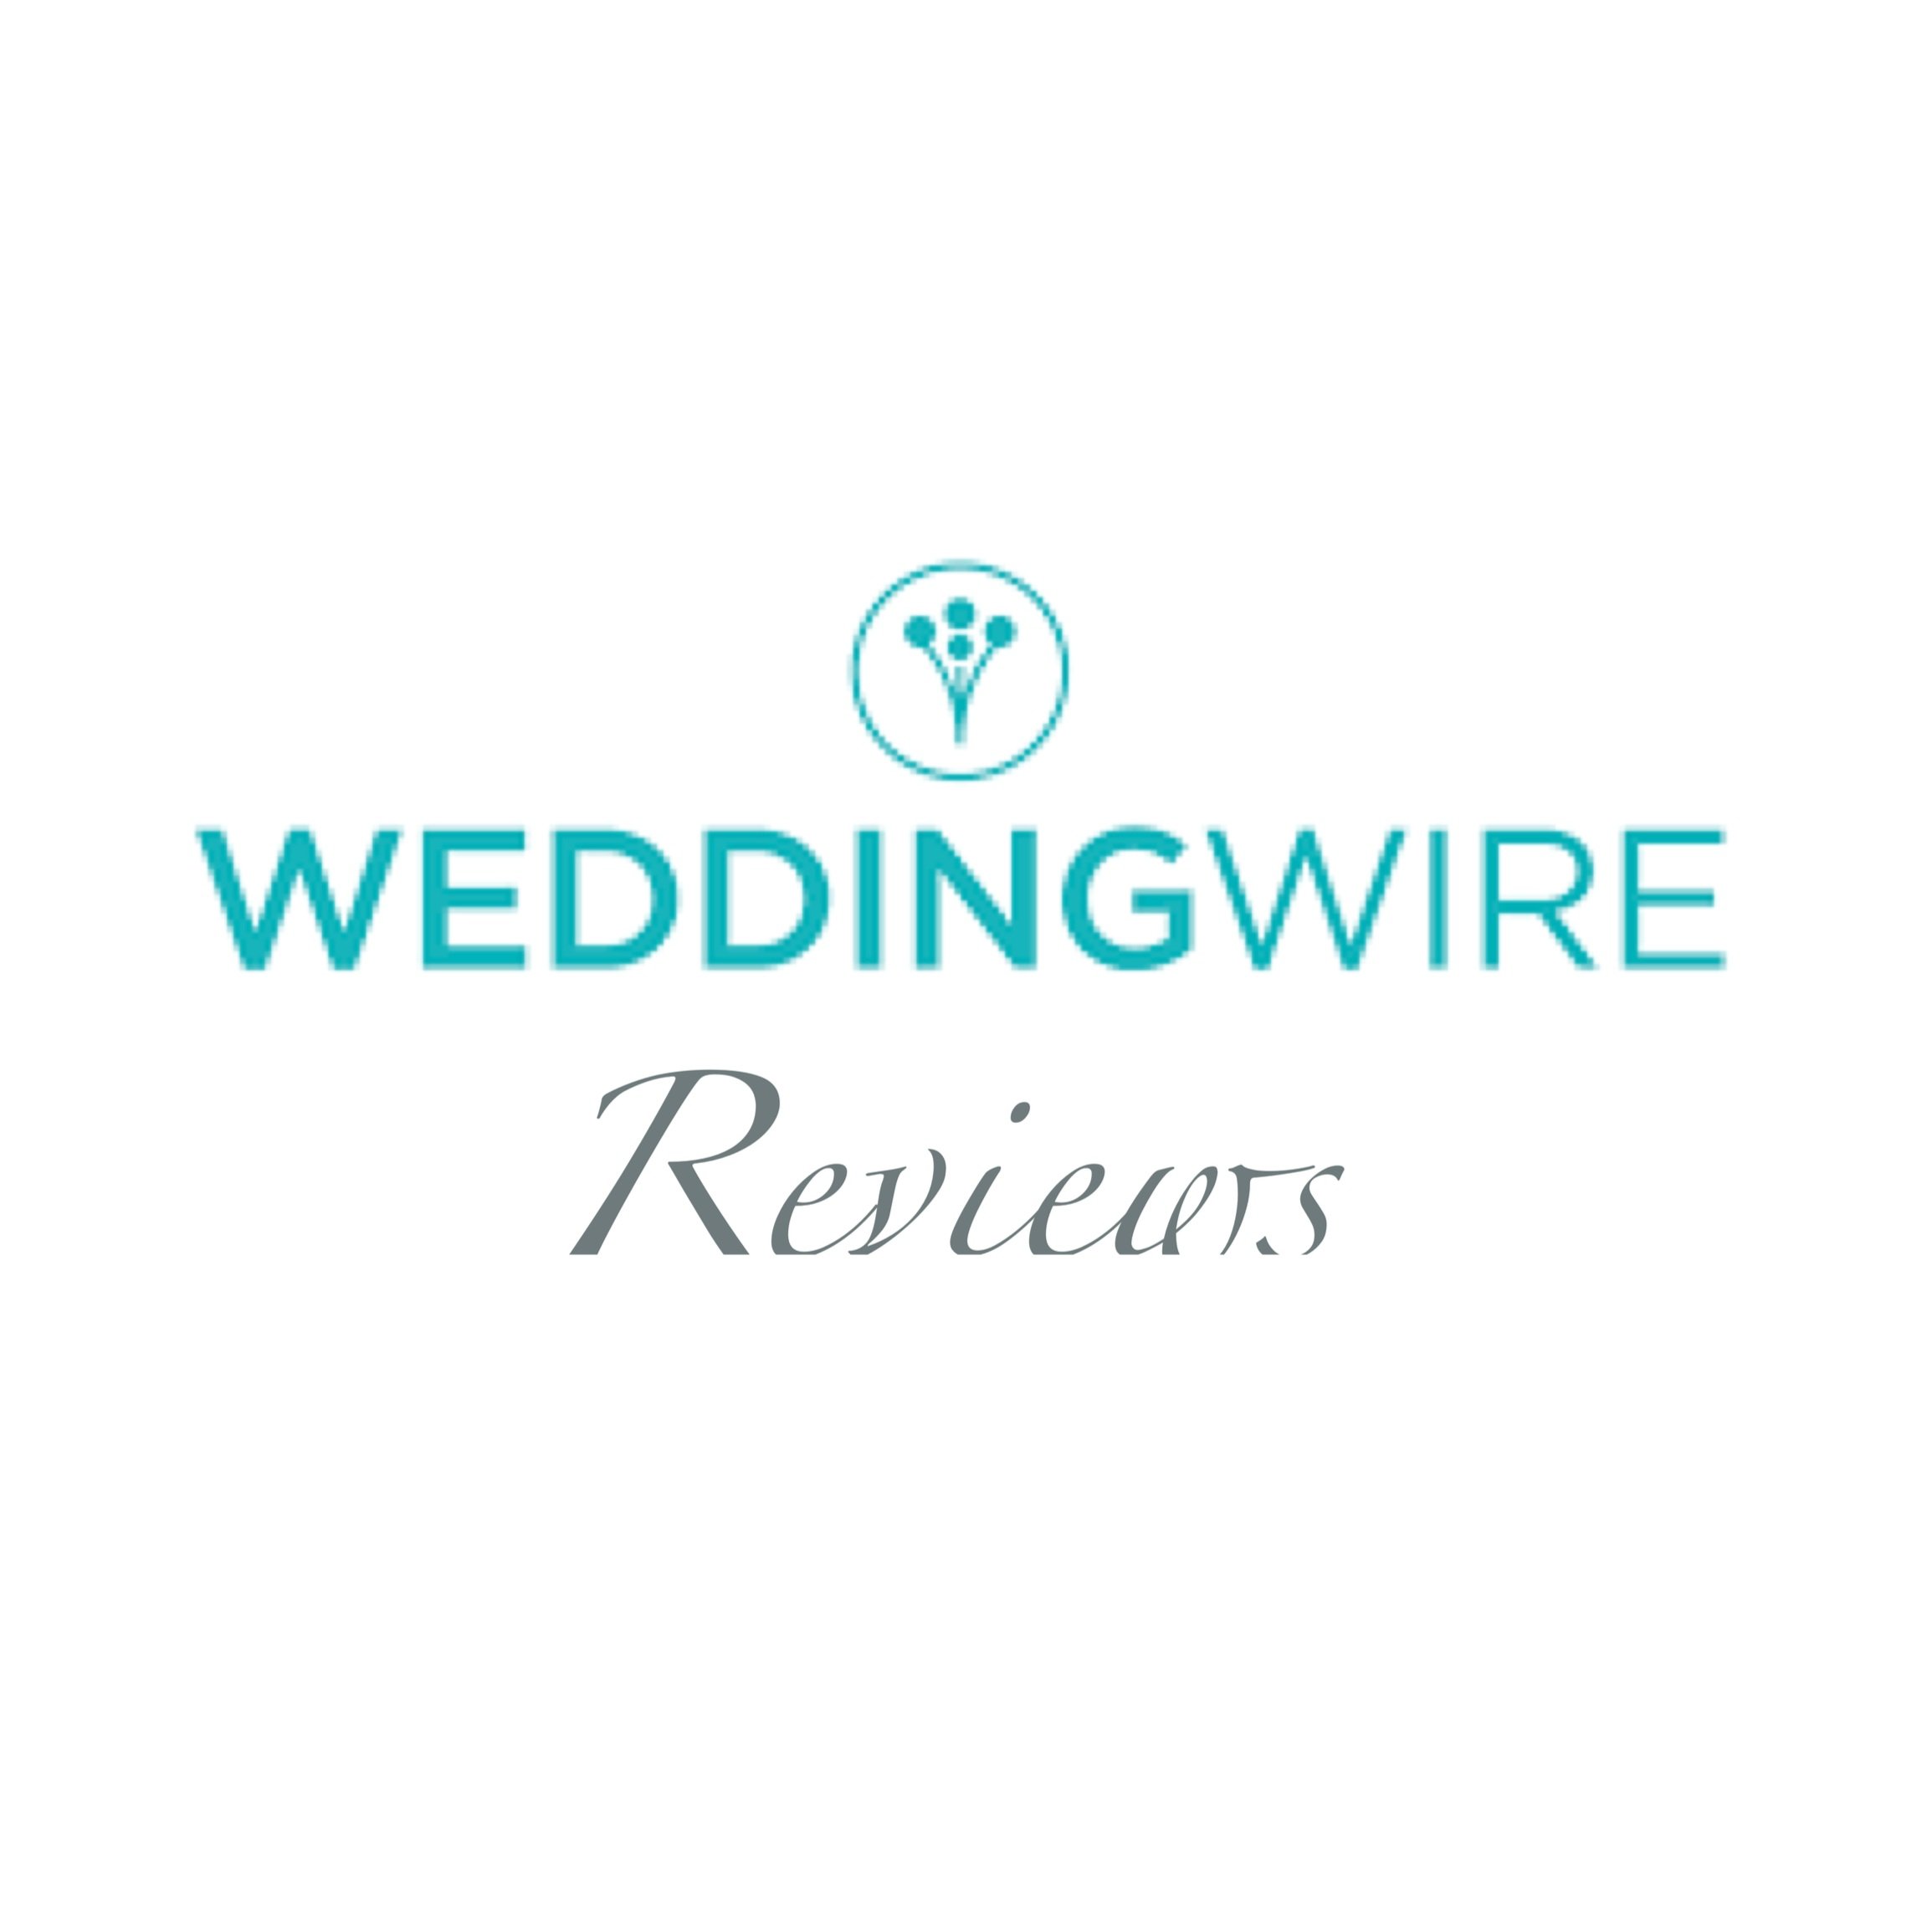 1+Weddingwire+reviews+2.jpg